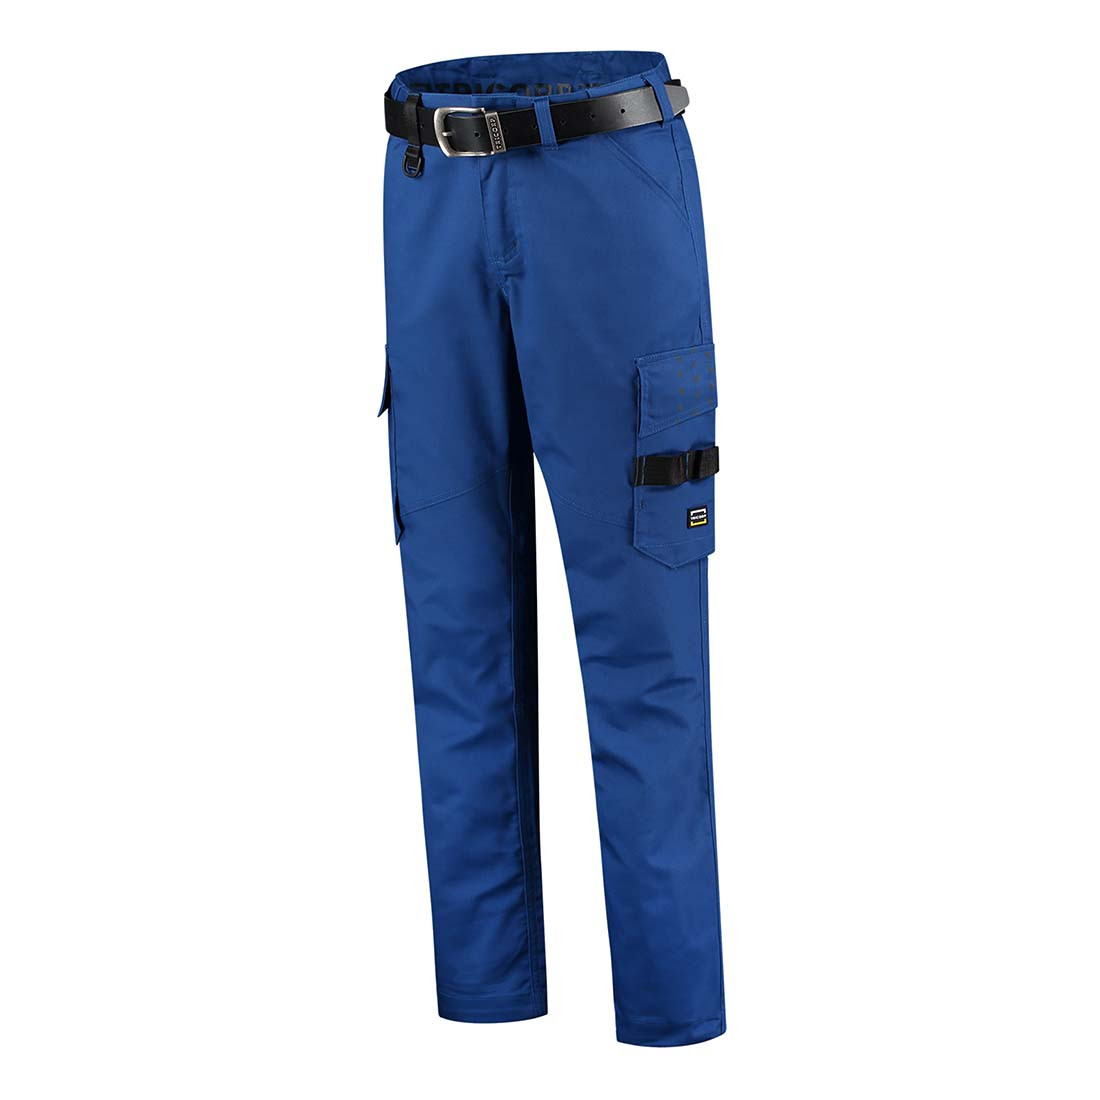 Unisex Work Trousers - Safetywear